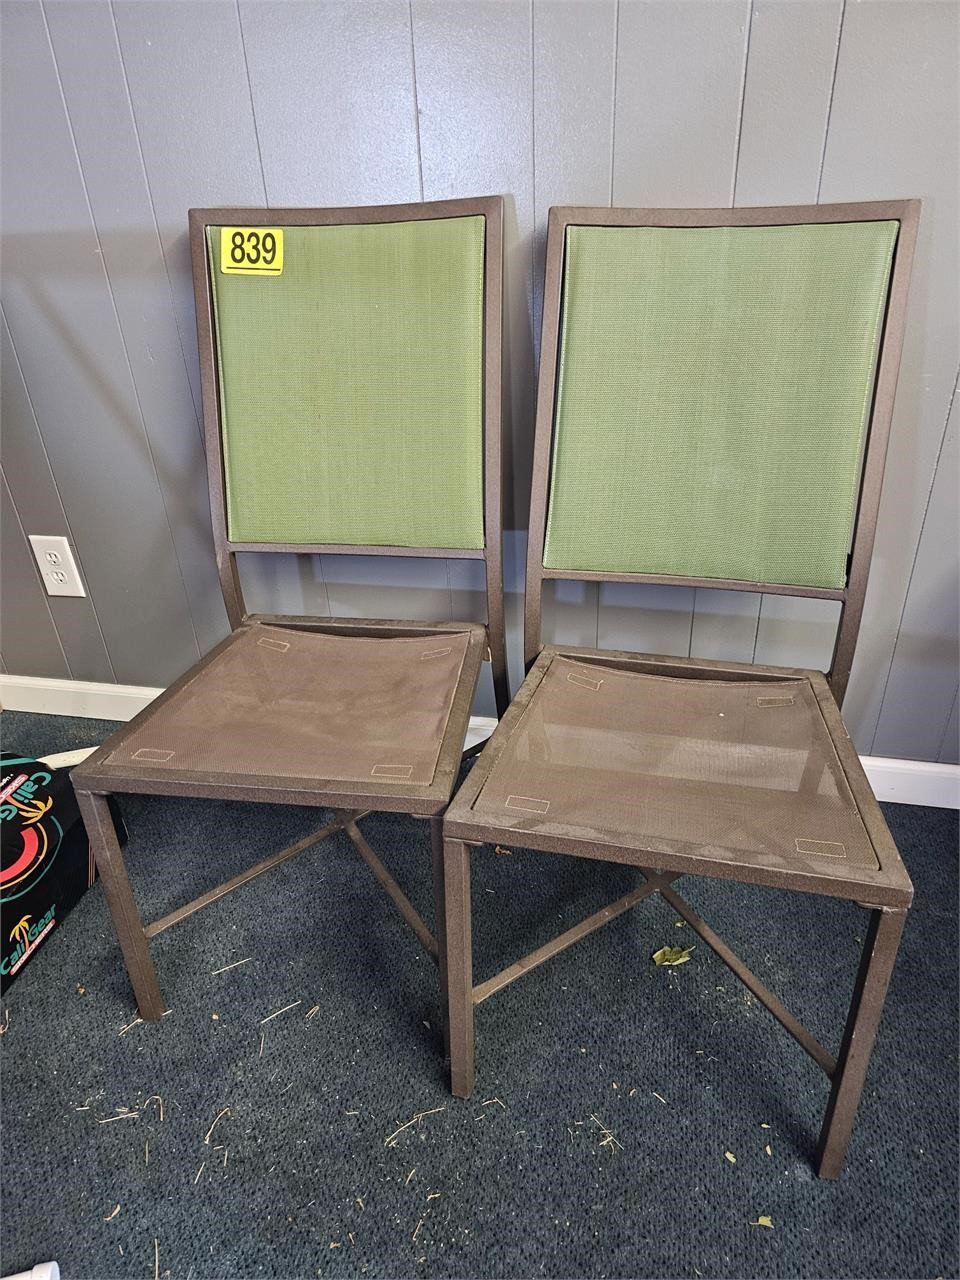 x2 metal & cushion patio chairs